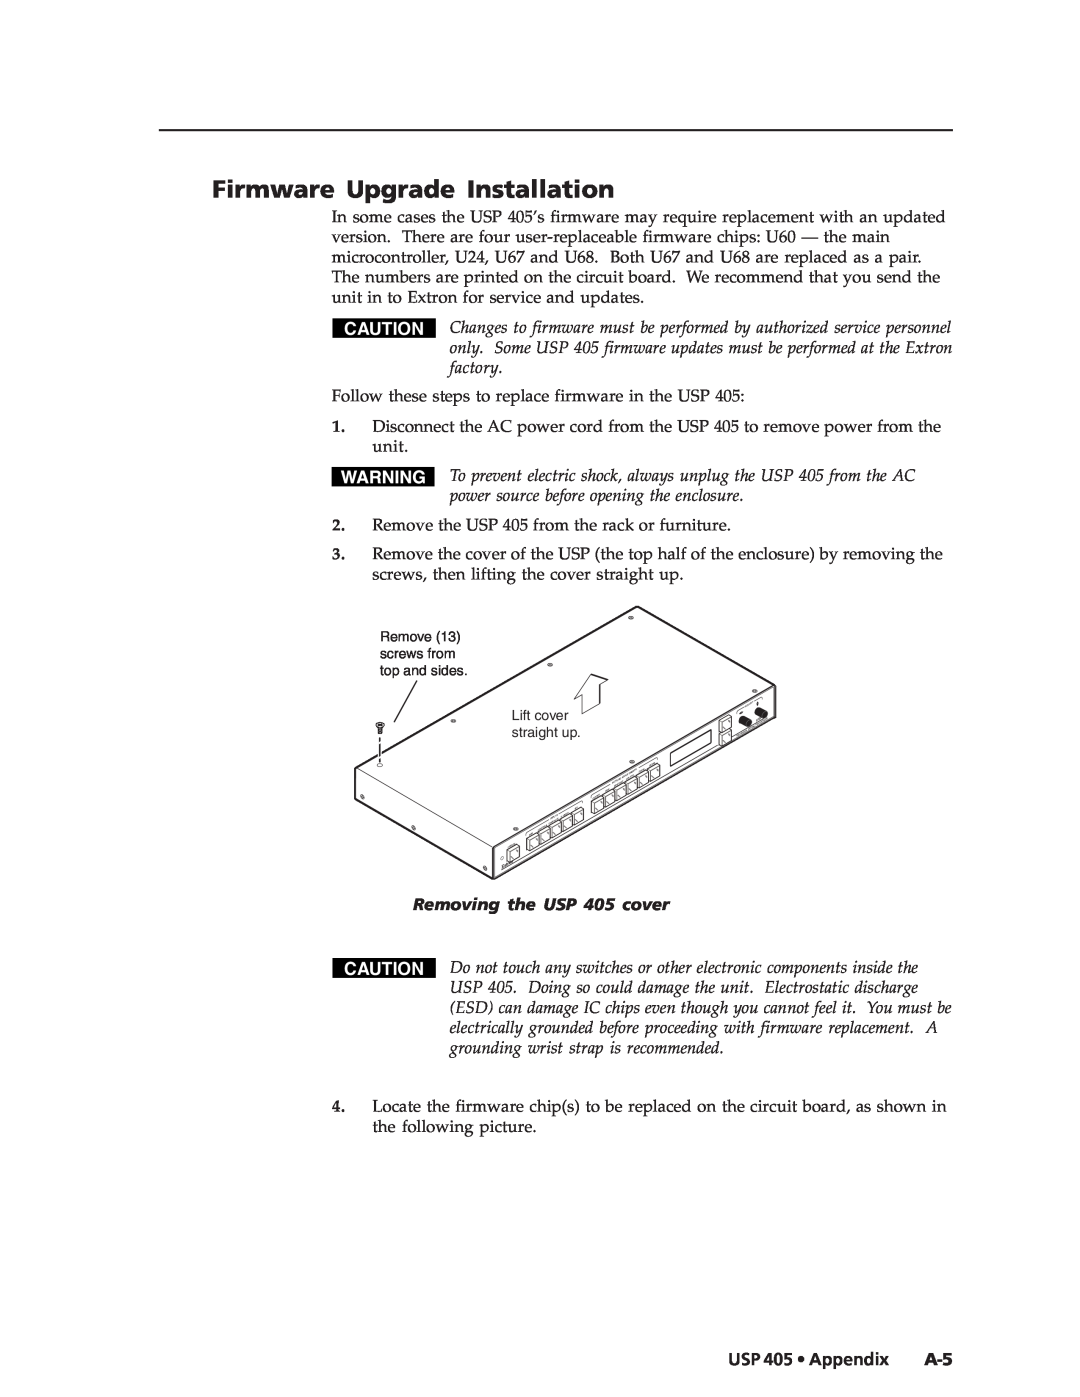 Extron electronic manual Firmware Upgrade Installation, USP 405 Appendix 